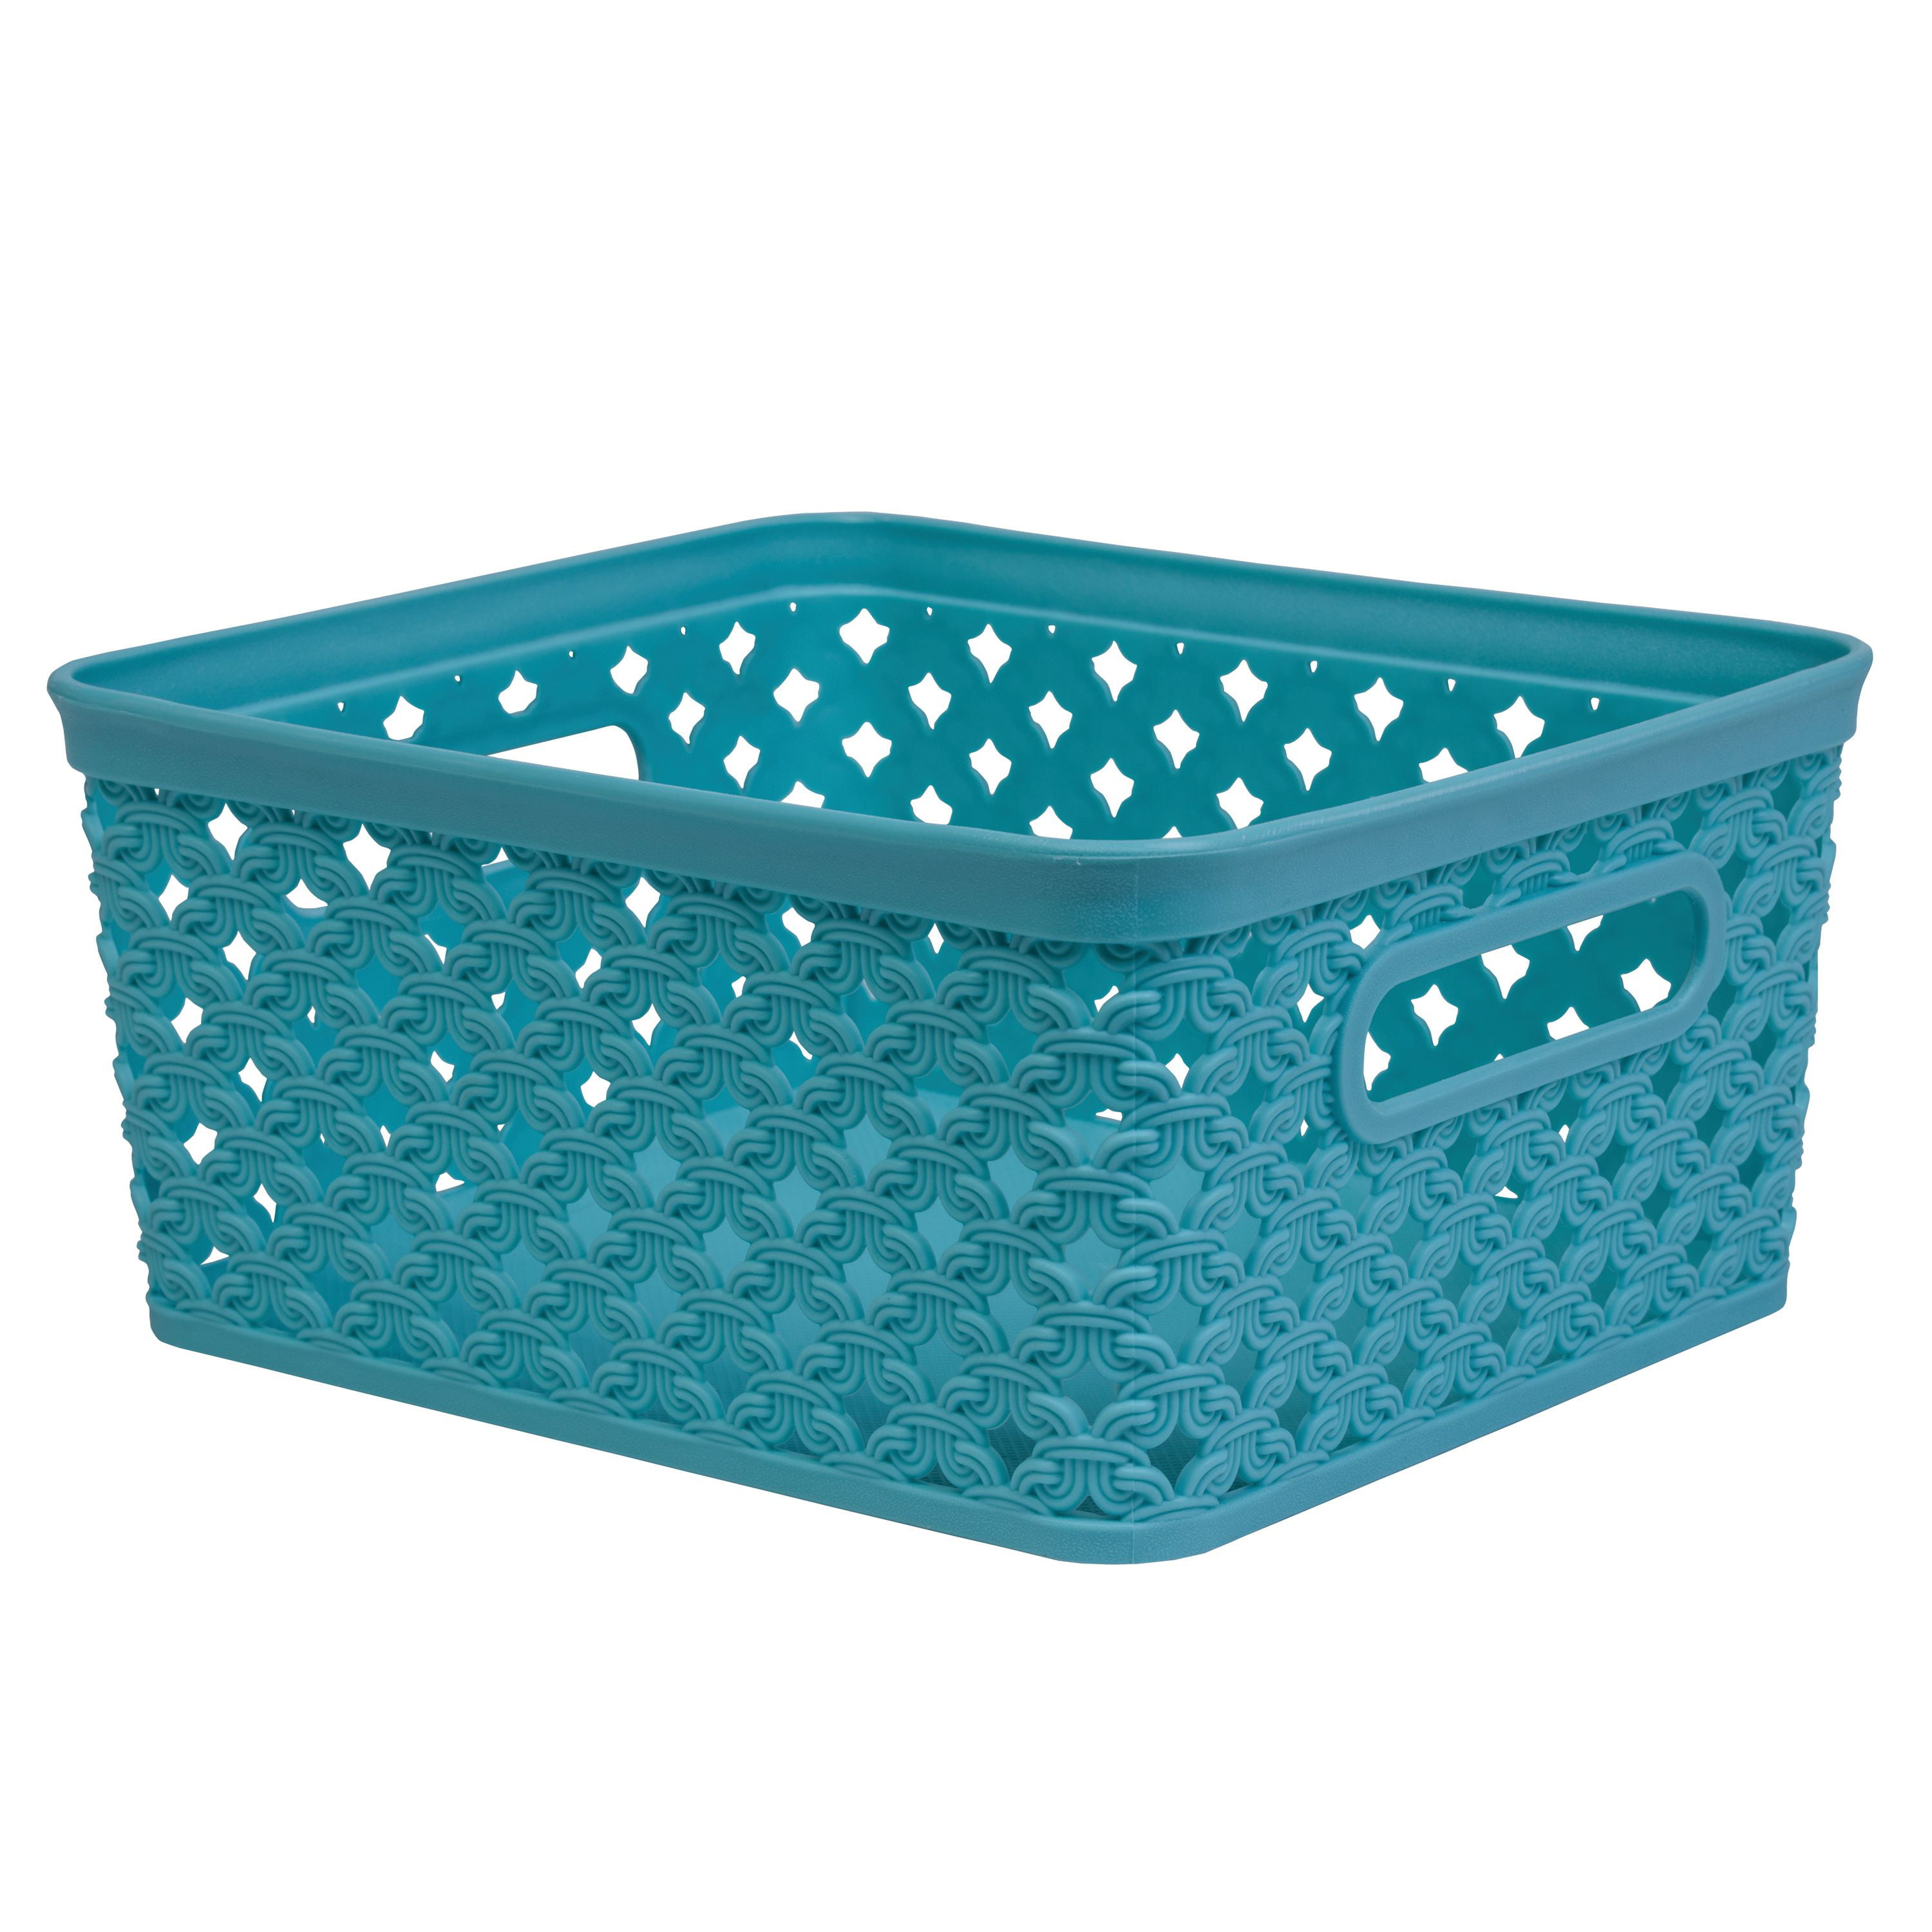 Mainstays Plastic Woven Decorative Teal Basket Walmart